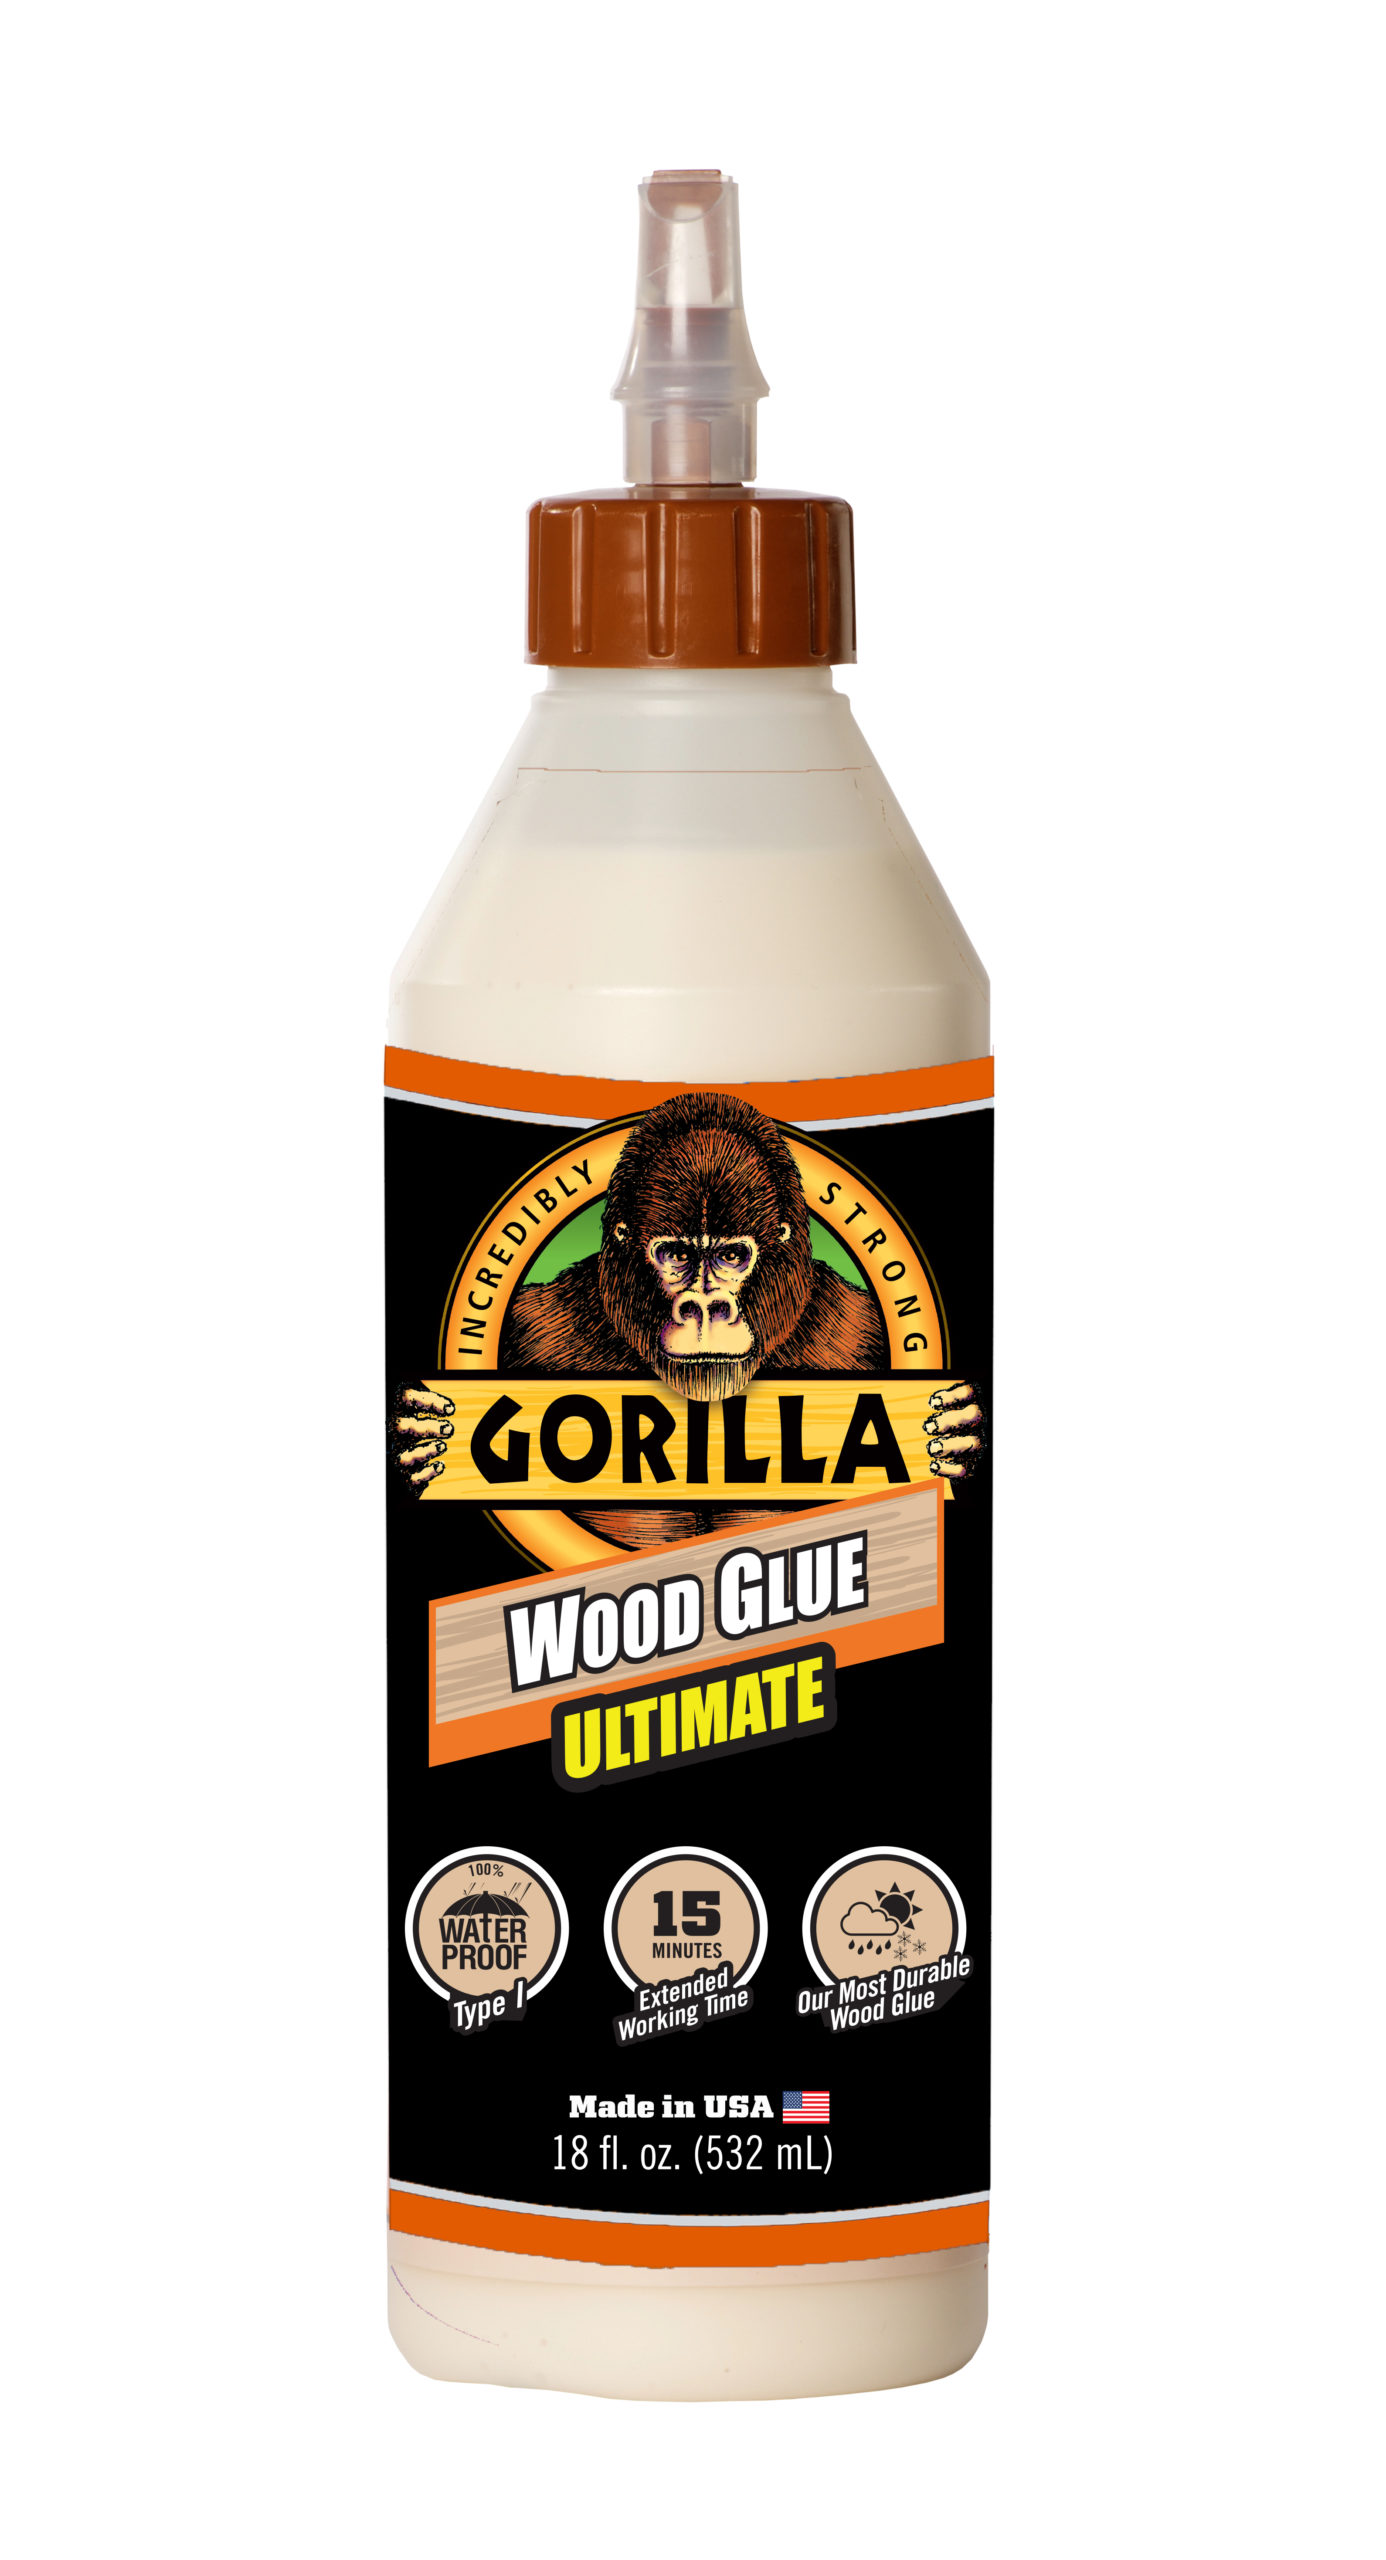 Gorilla Wood Glue Ultimate